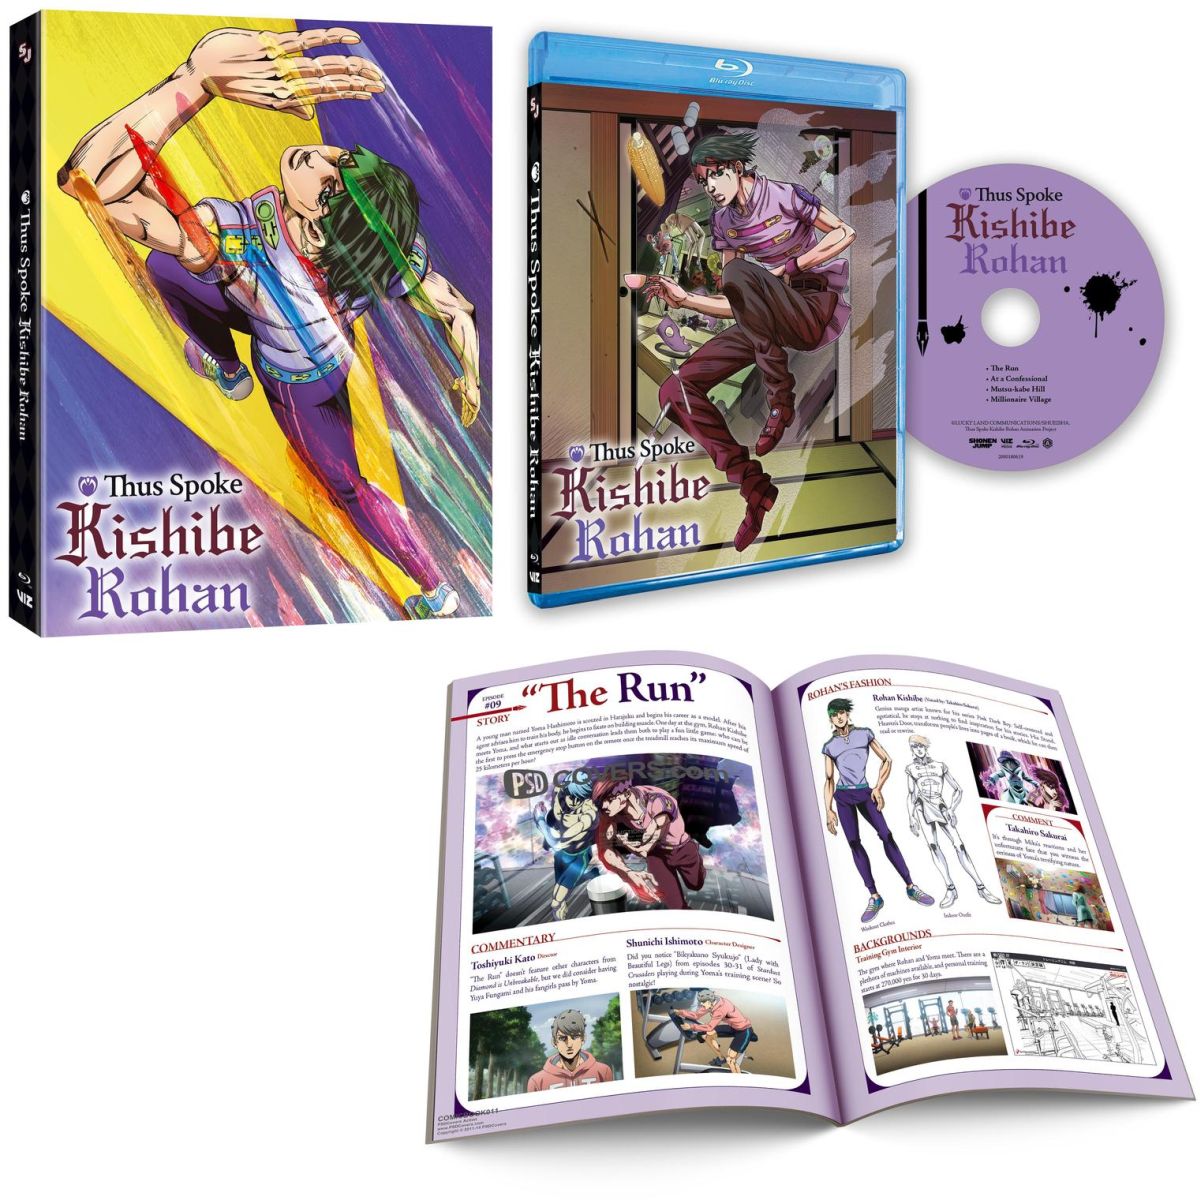 Thus Spoke Kishibe Rohan Limited Edition Blu-ray image count 1